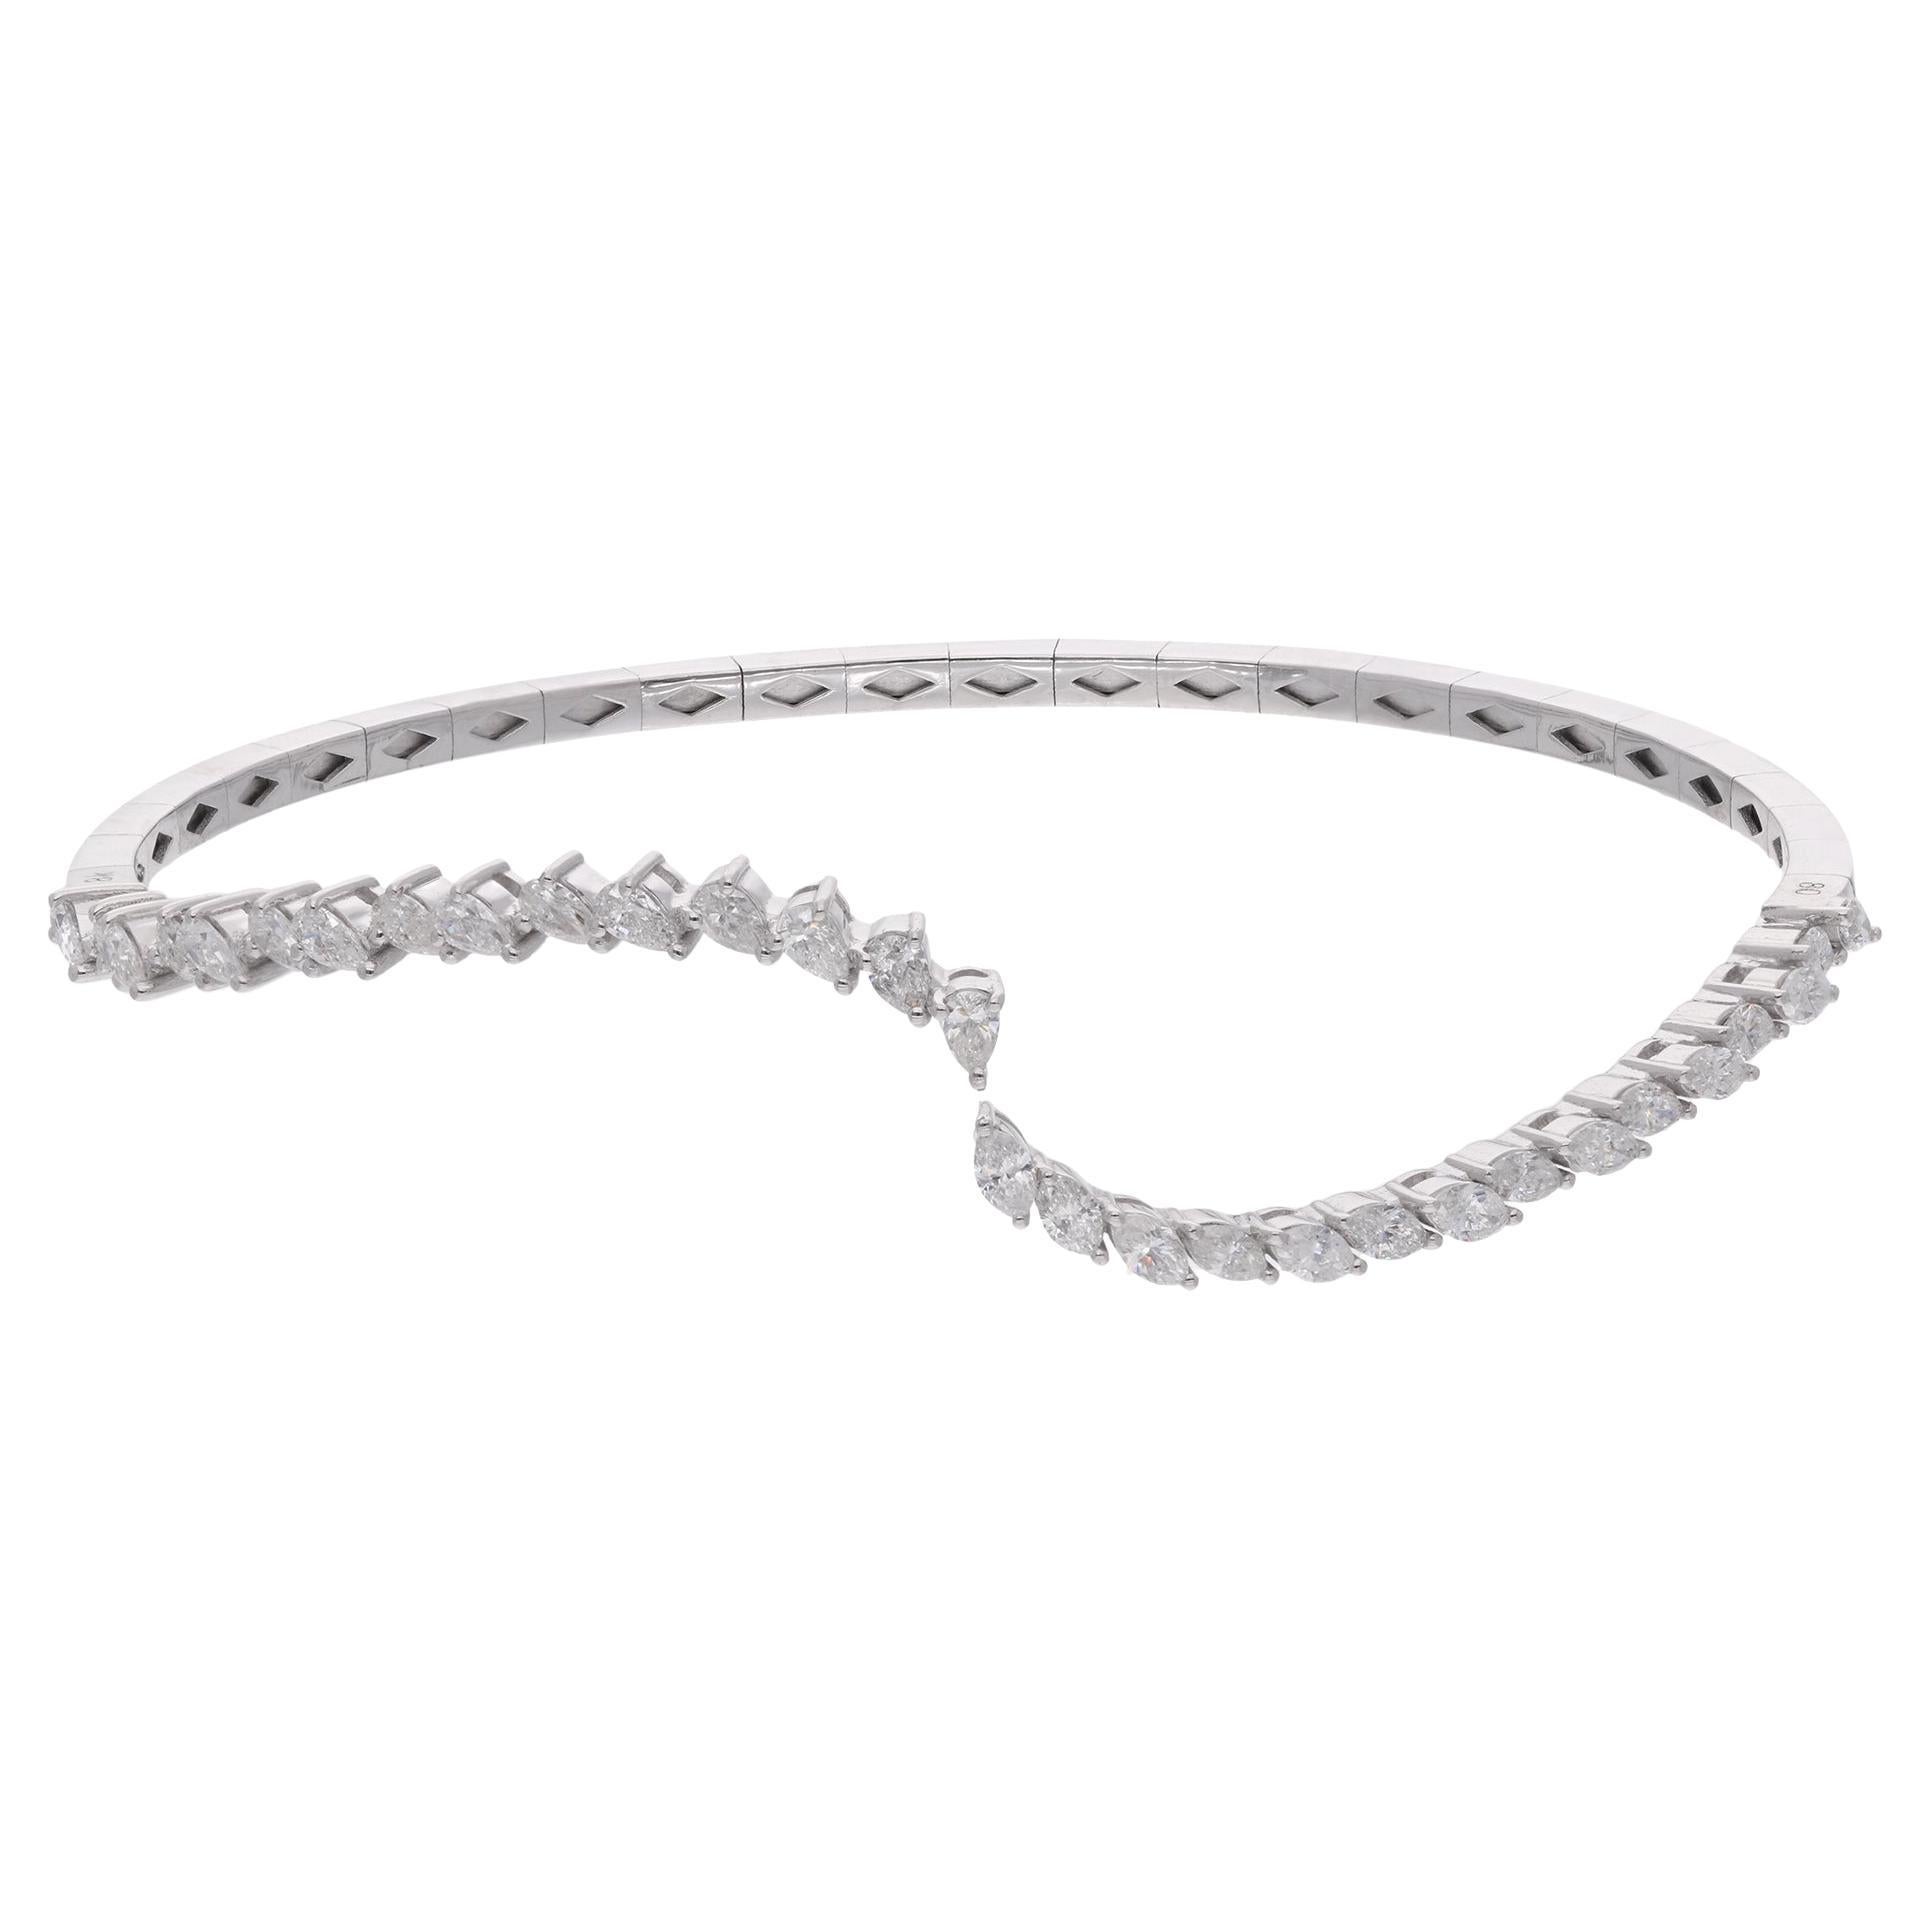 1.36 Carat Pear Diamond Wave Design Bangle Bracelet 18 Karat White Gold Jewelry